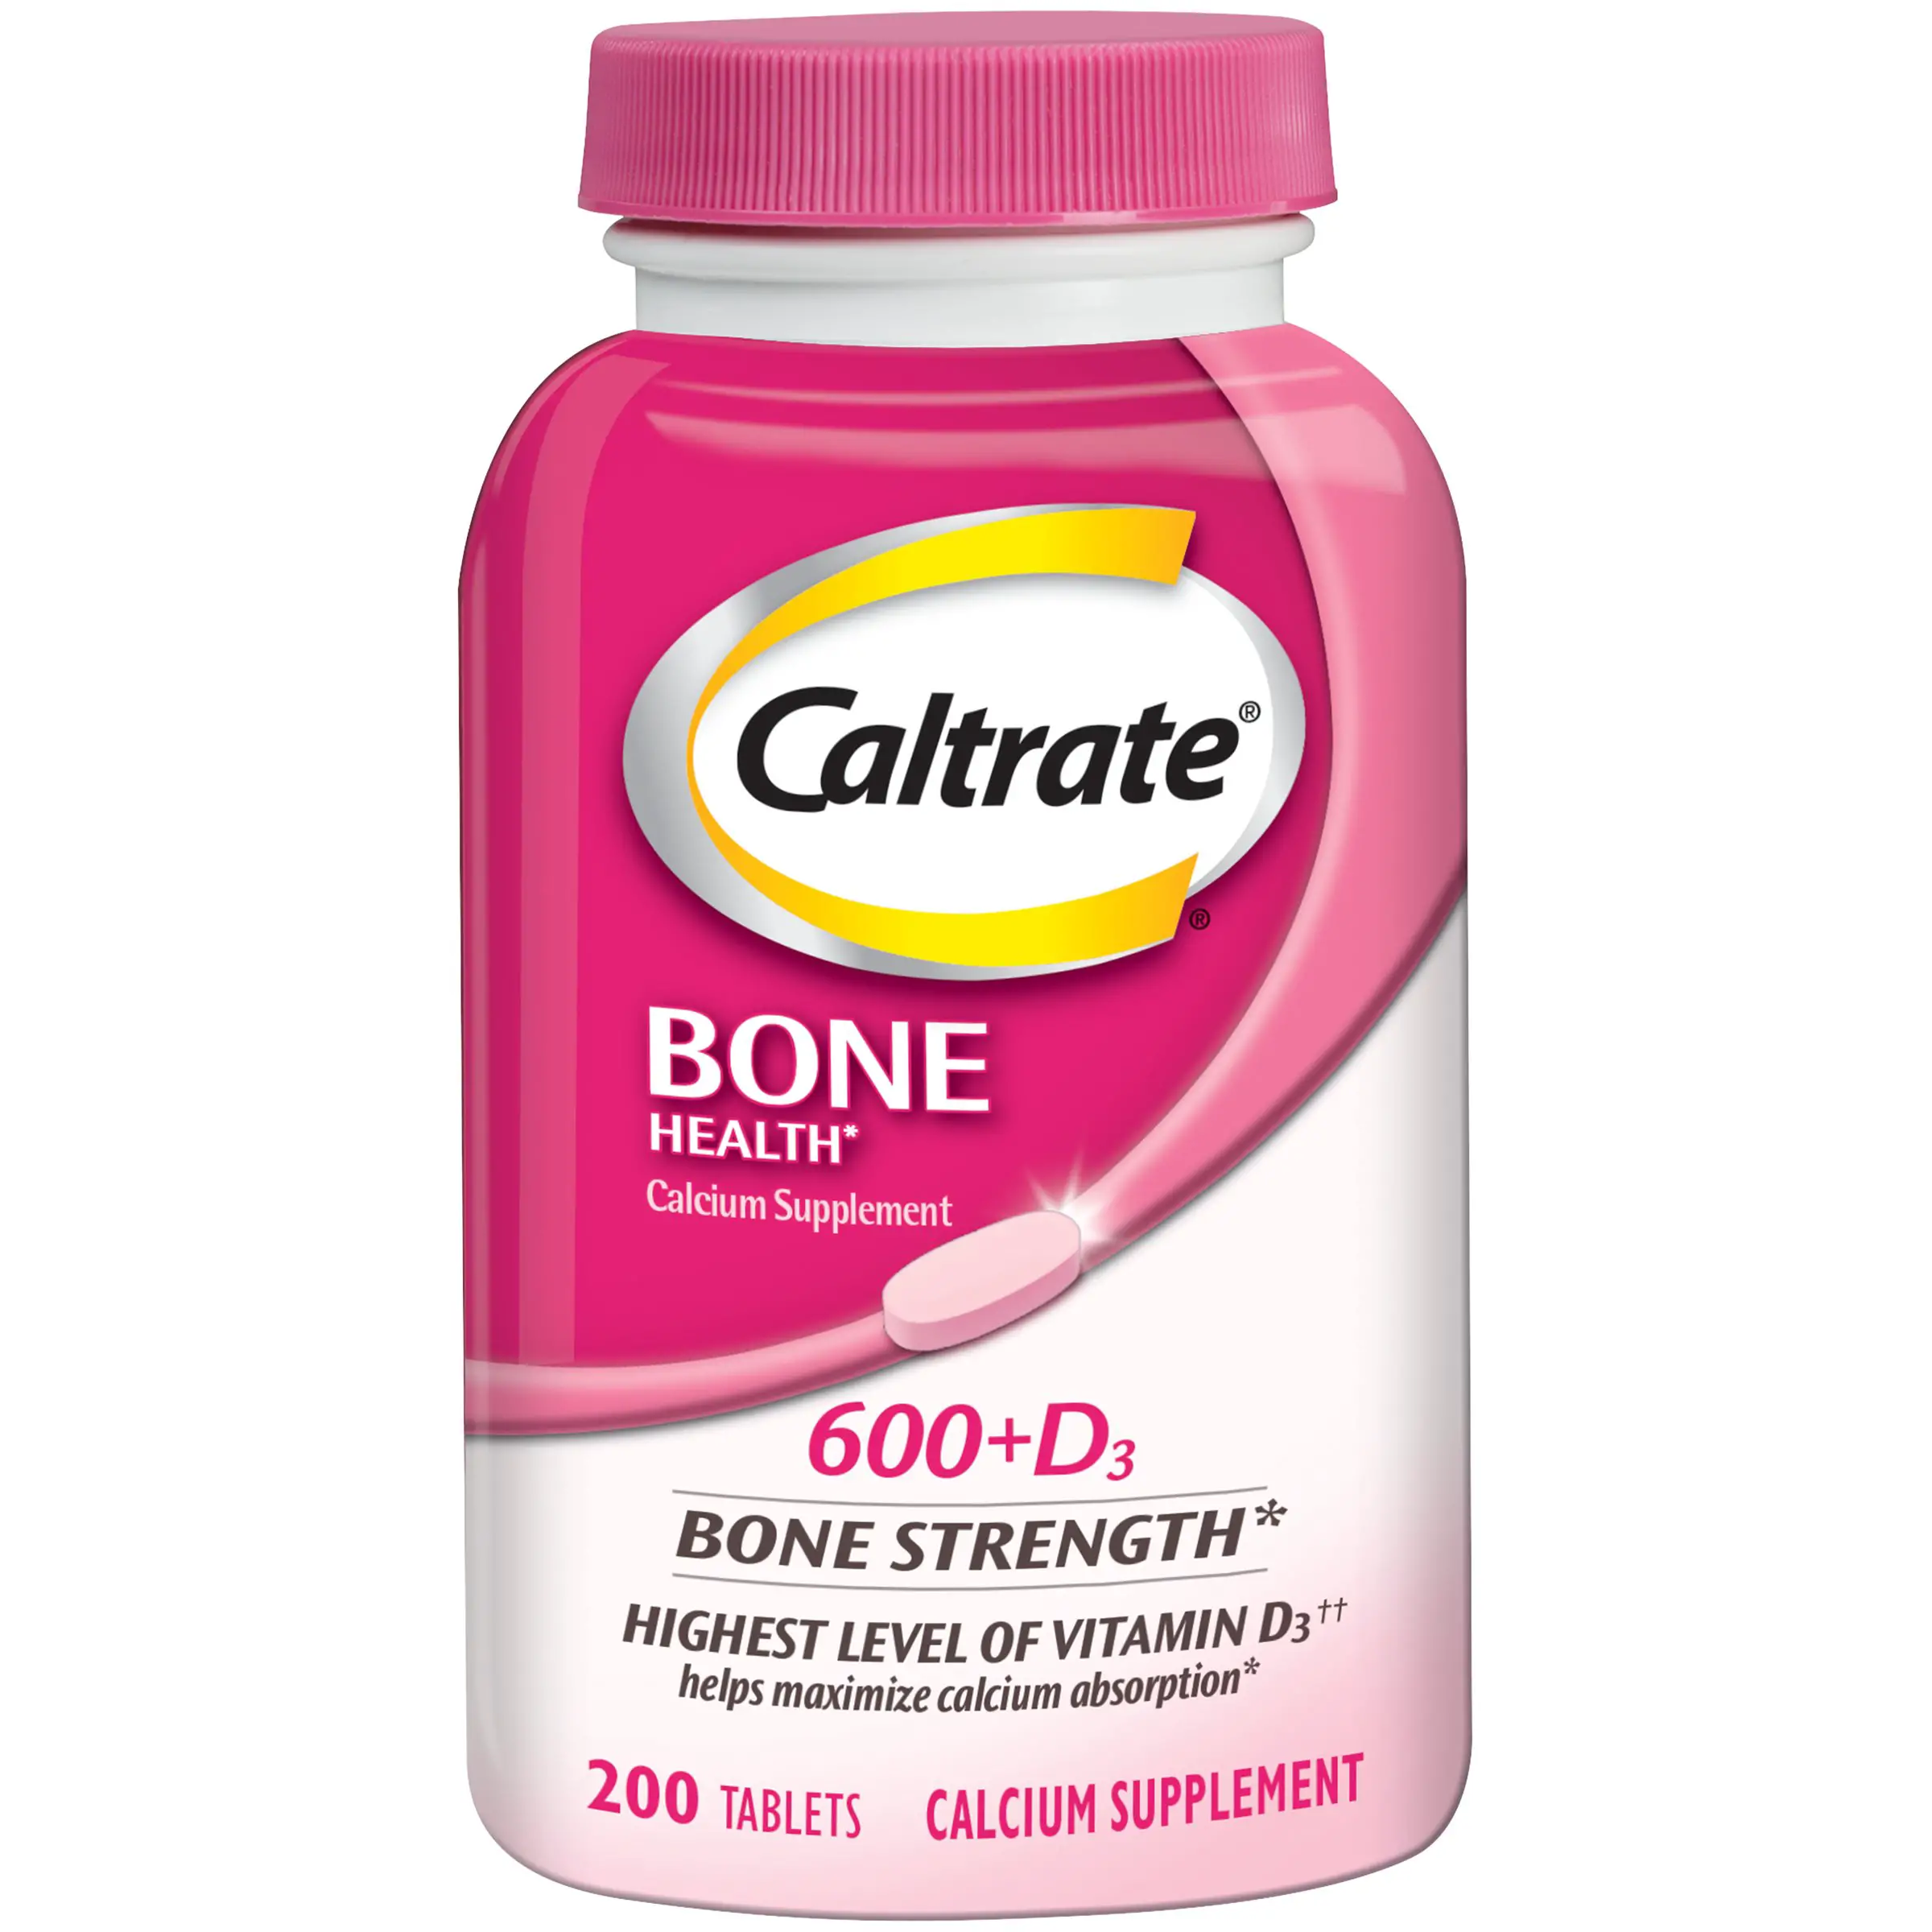 Caltrate Bone Health 600+D3 Calcium Tablets, 200 Ct